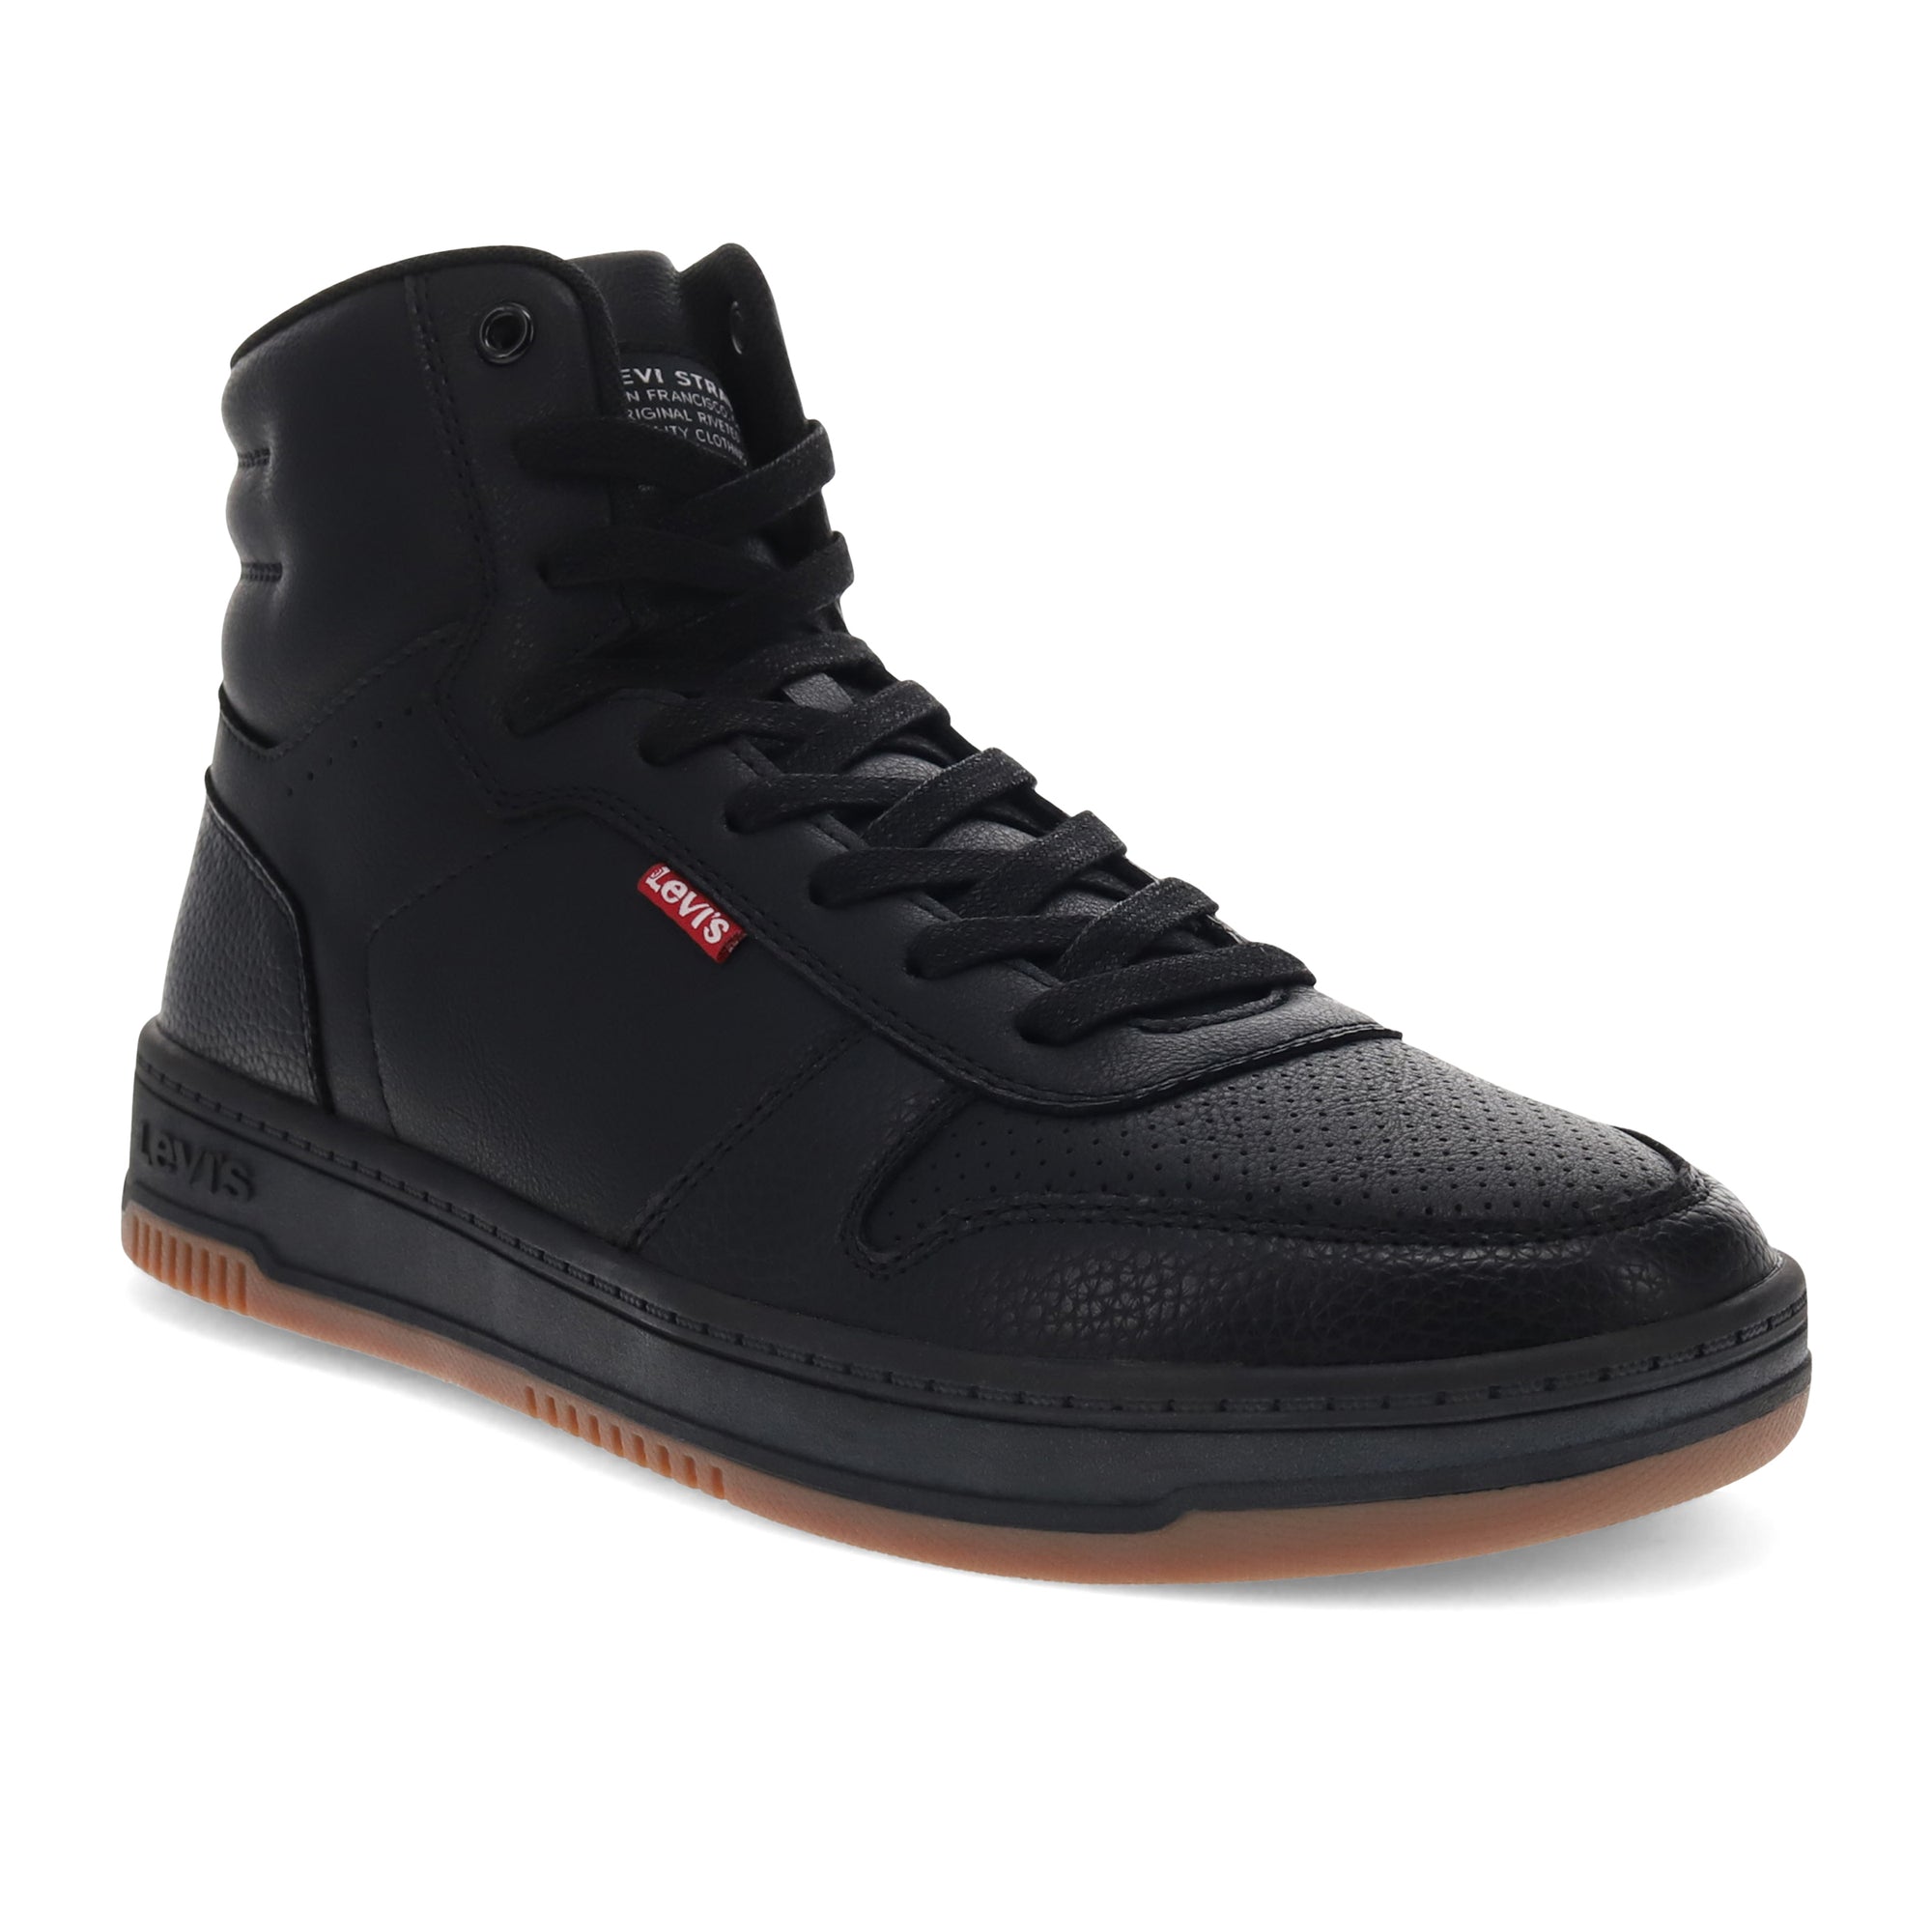 Black/Gum-Levi's Mens Drive Hi Synthetic Leather Casual Hightop Sneaker Shoe